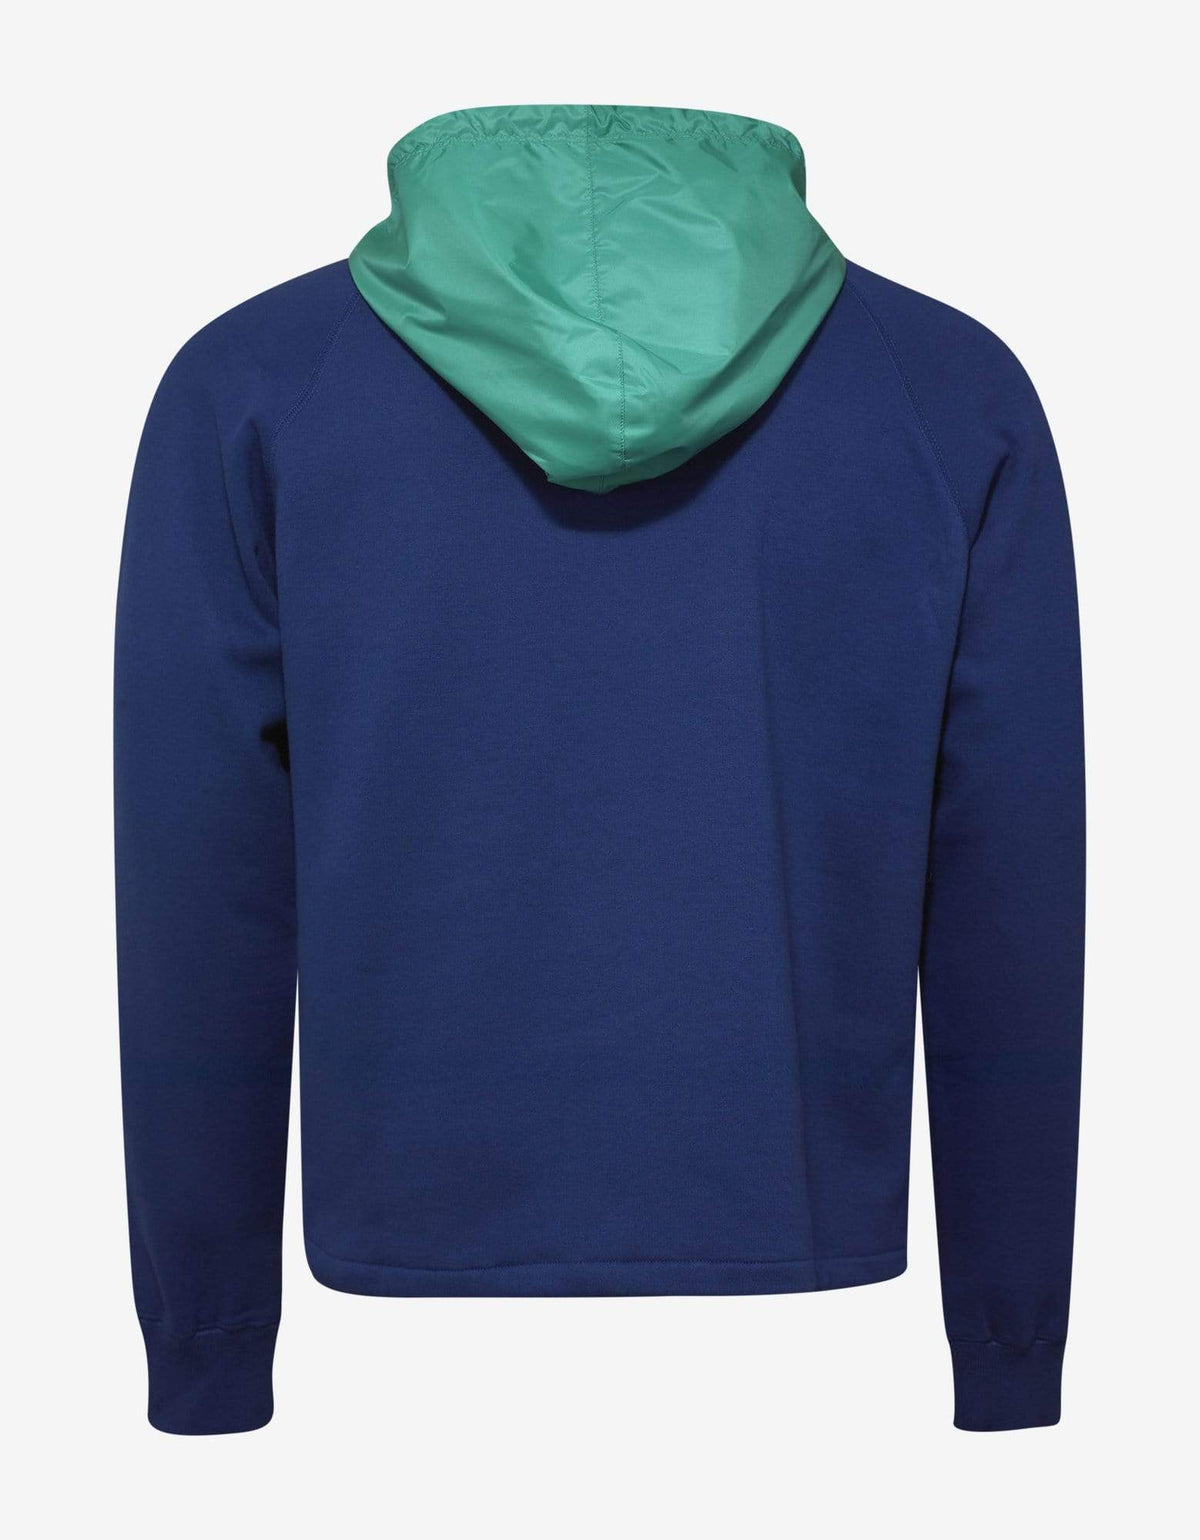 Valentino Blue 'Always' Print Hooded Sweatshirt